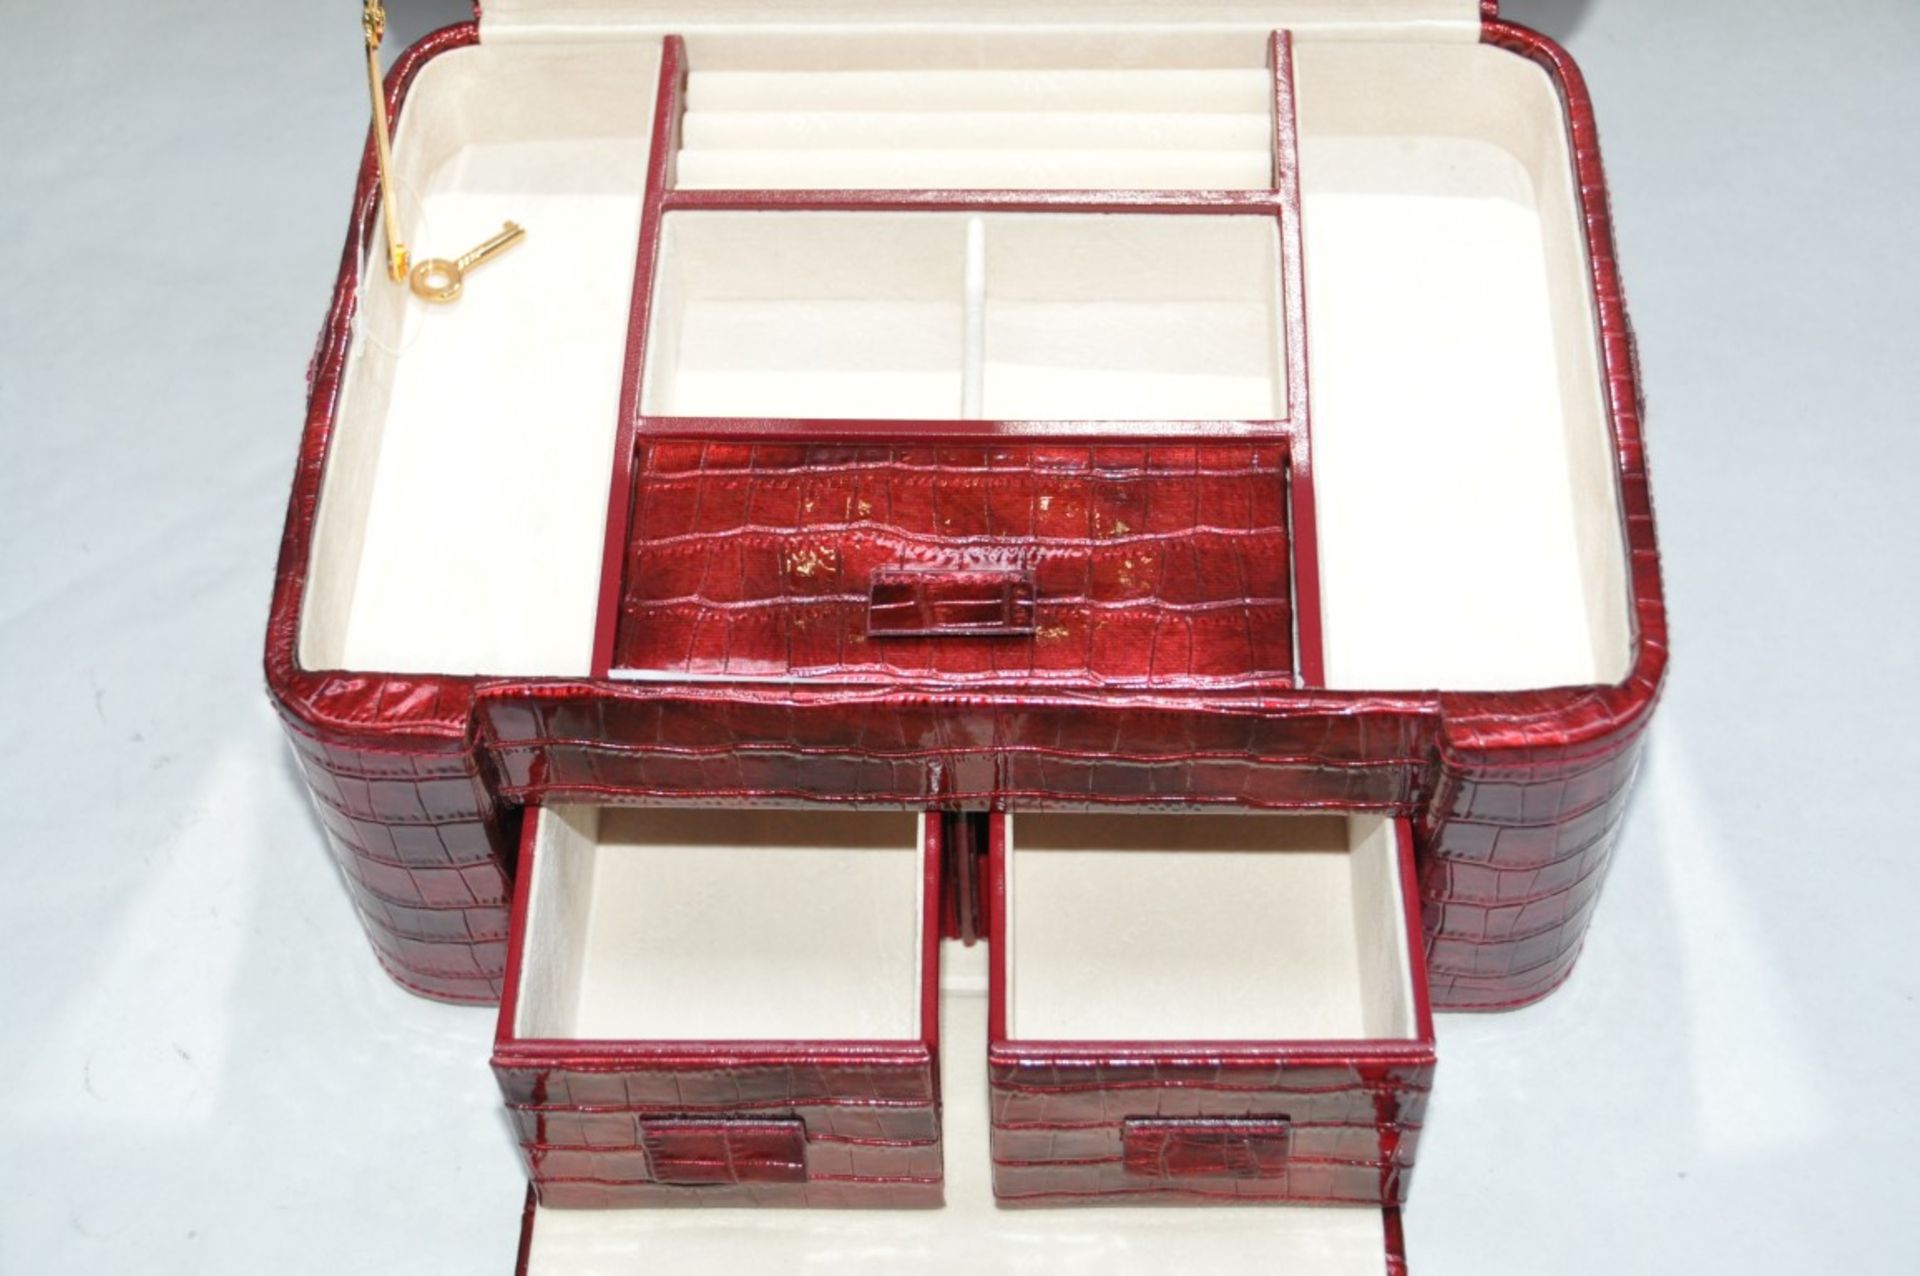 1 x "AB Collezioni" Italian Genuine Suede-Lined Luxury "Epoque" Jewellery Box (E130B) - Ref: LT000 - - Image 3 of 6